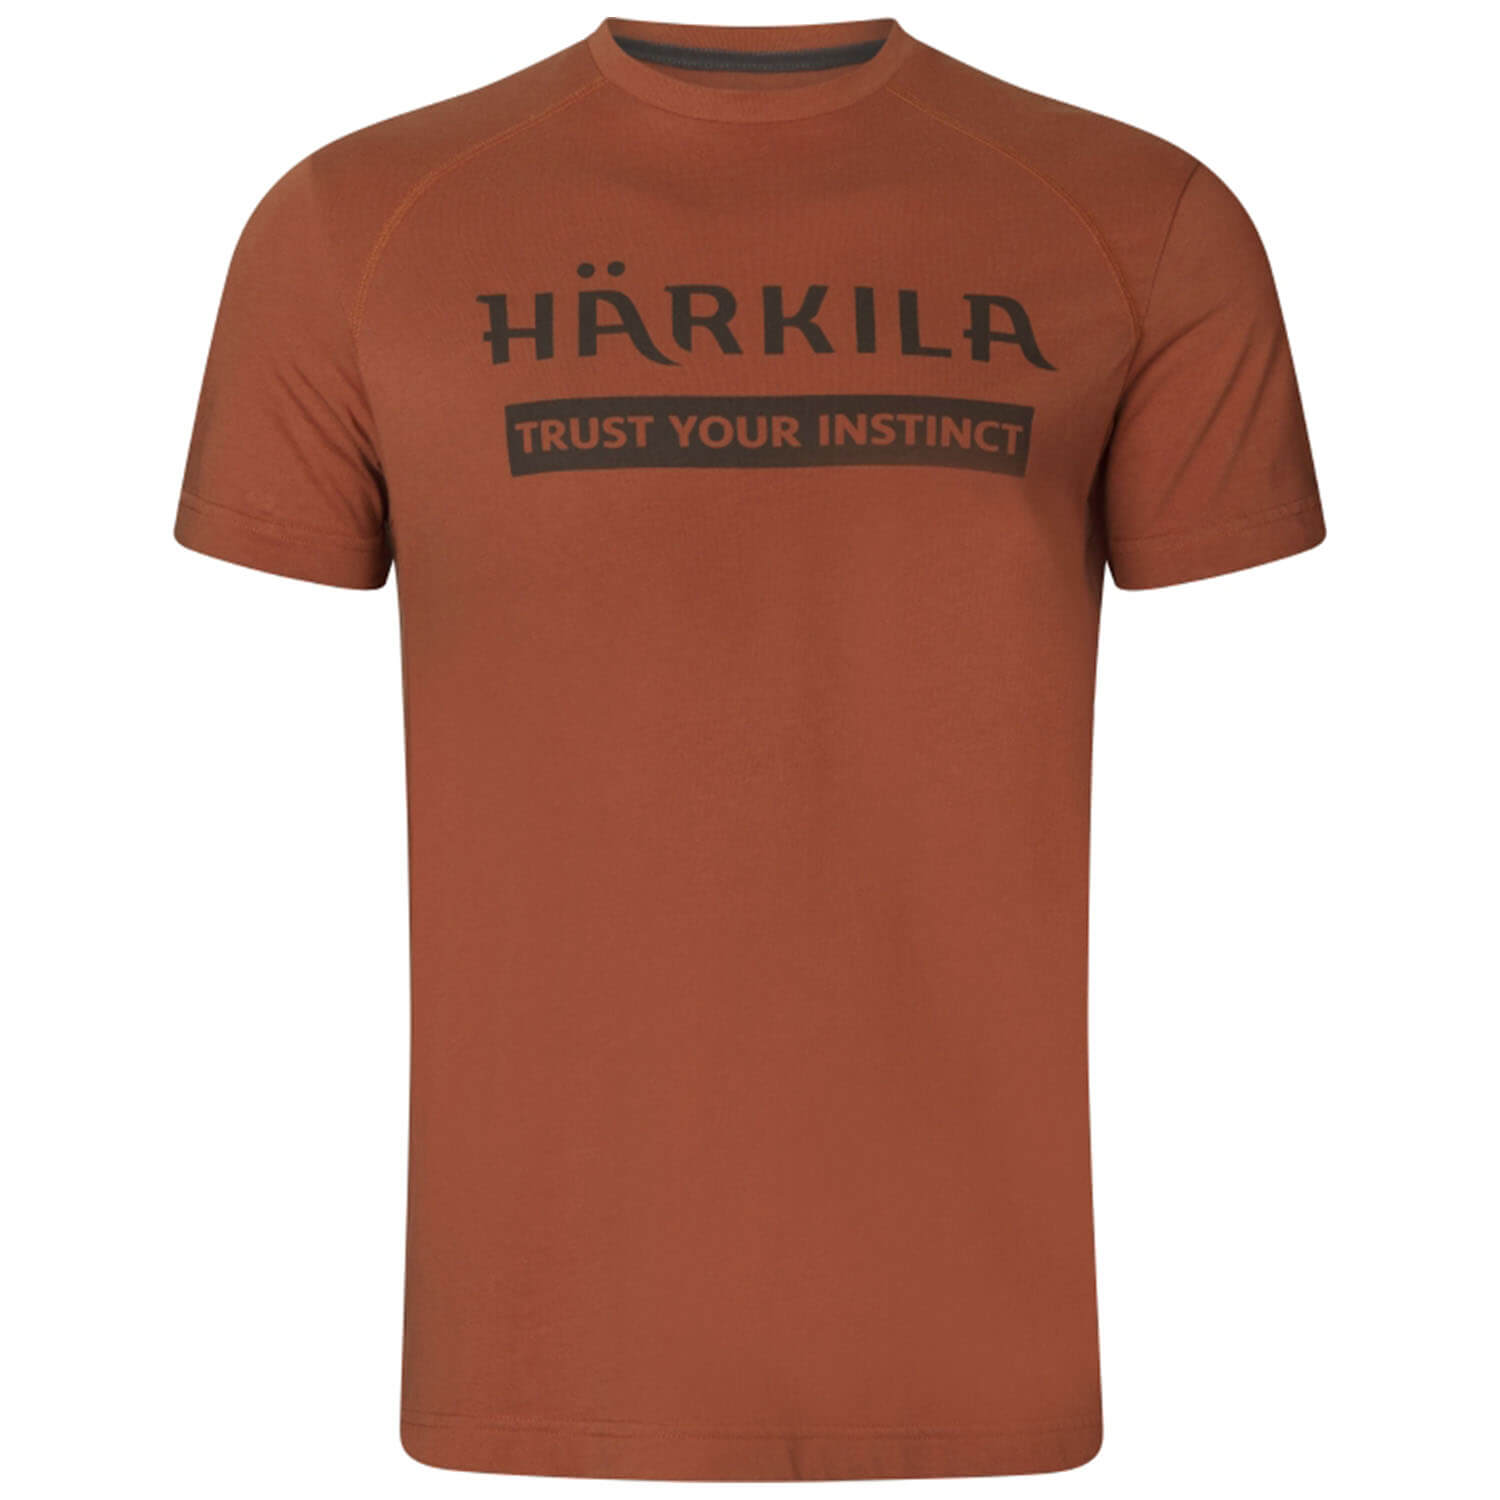  Härkila T-shirts logo (Arabian Spice) - Jachtshirts